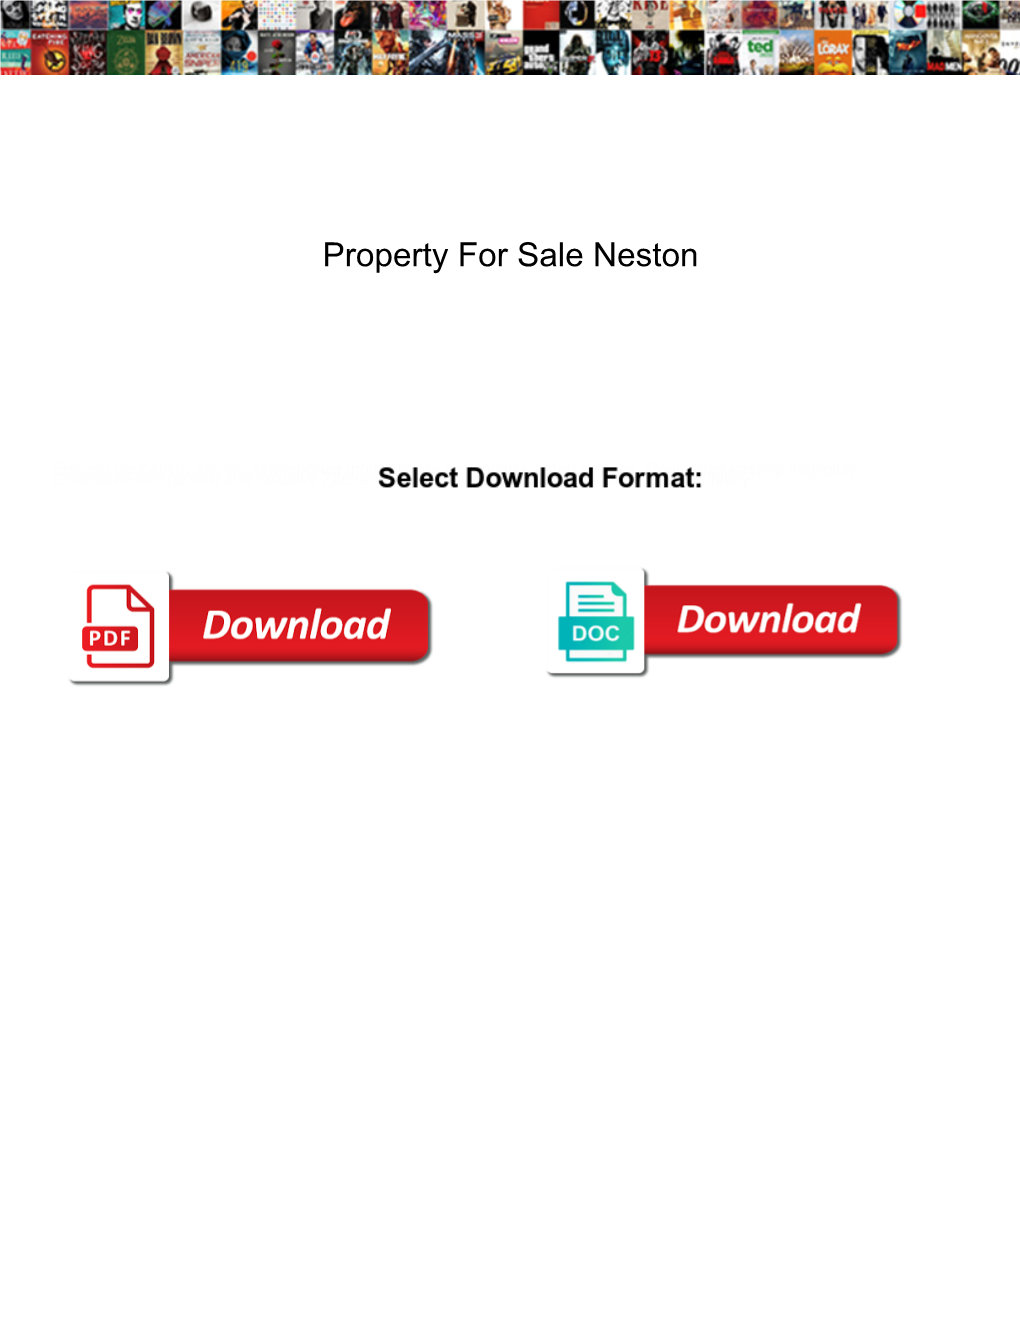 Property for Sale Neston